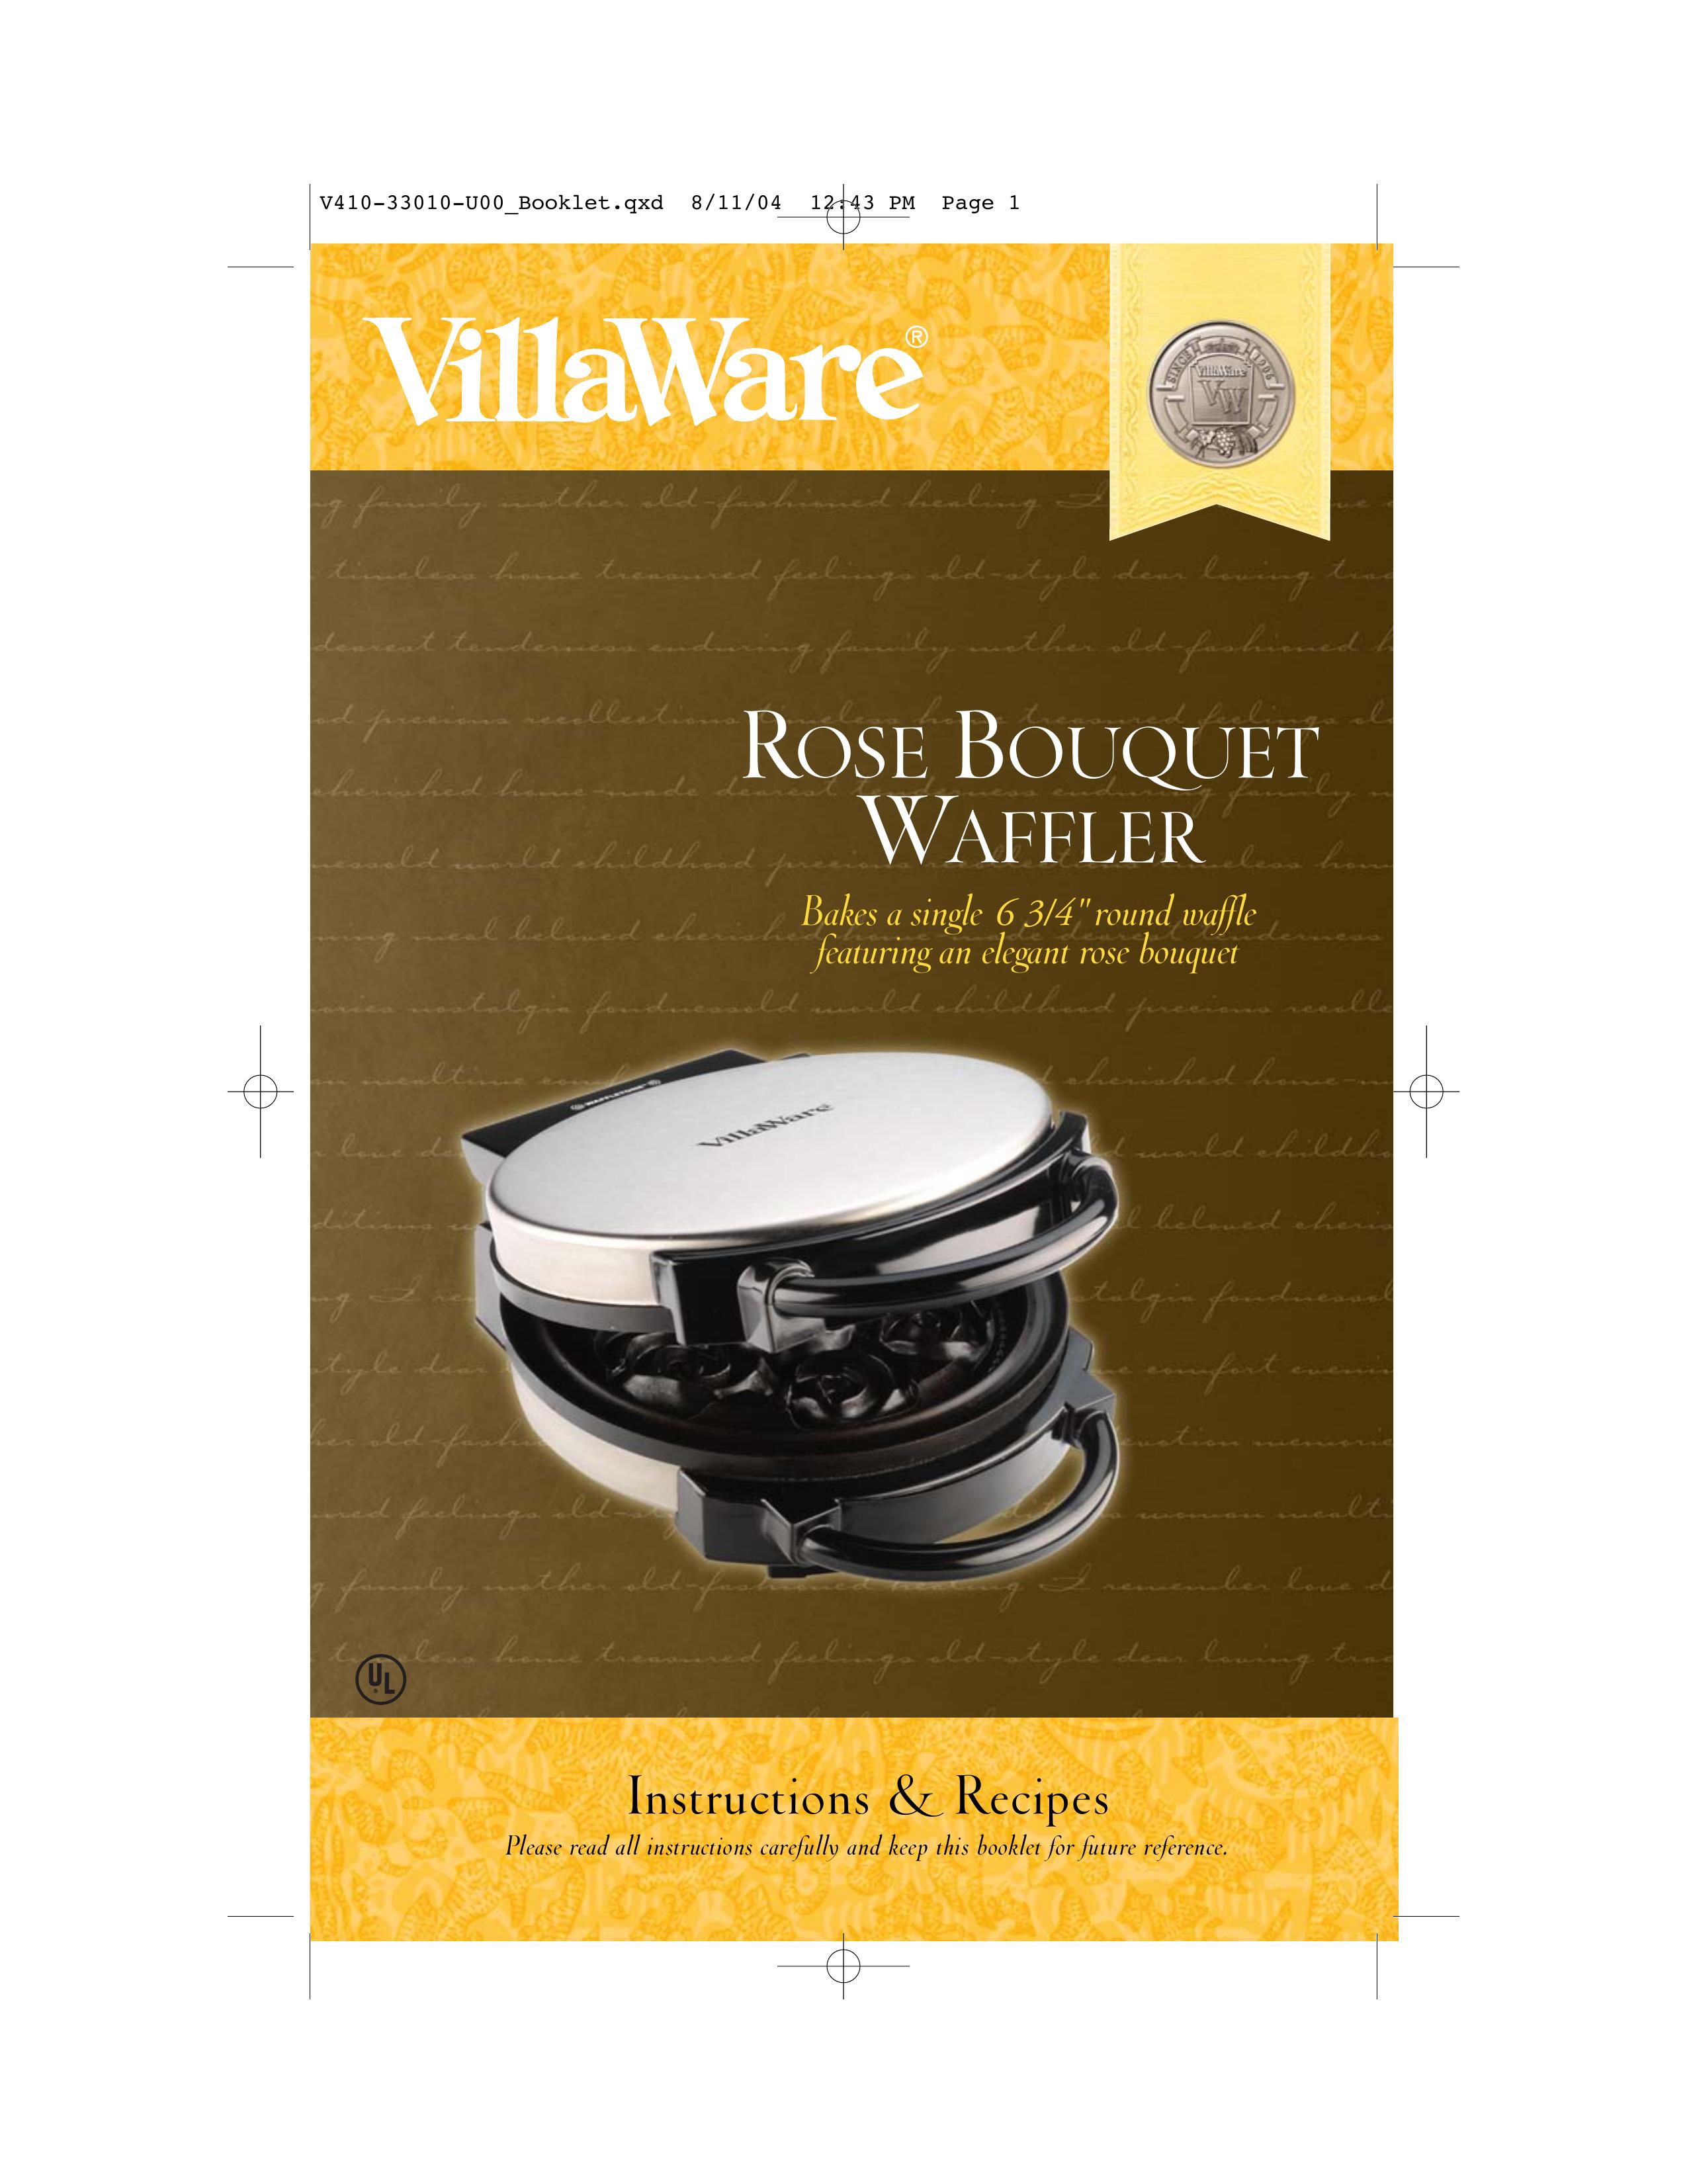 Villaware ROSE BOUQUET WAFFLER Waffle Iron User Manual